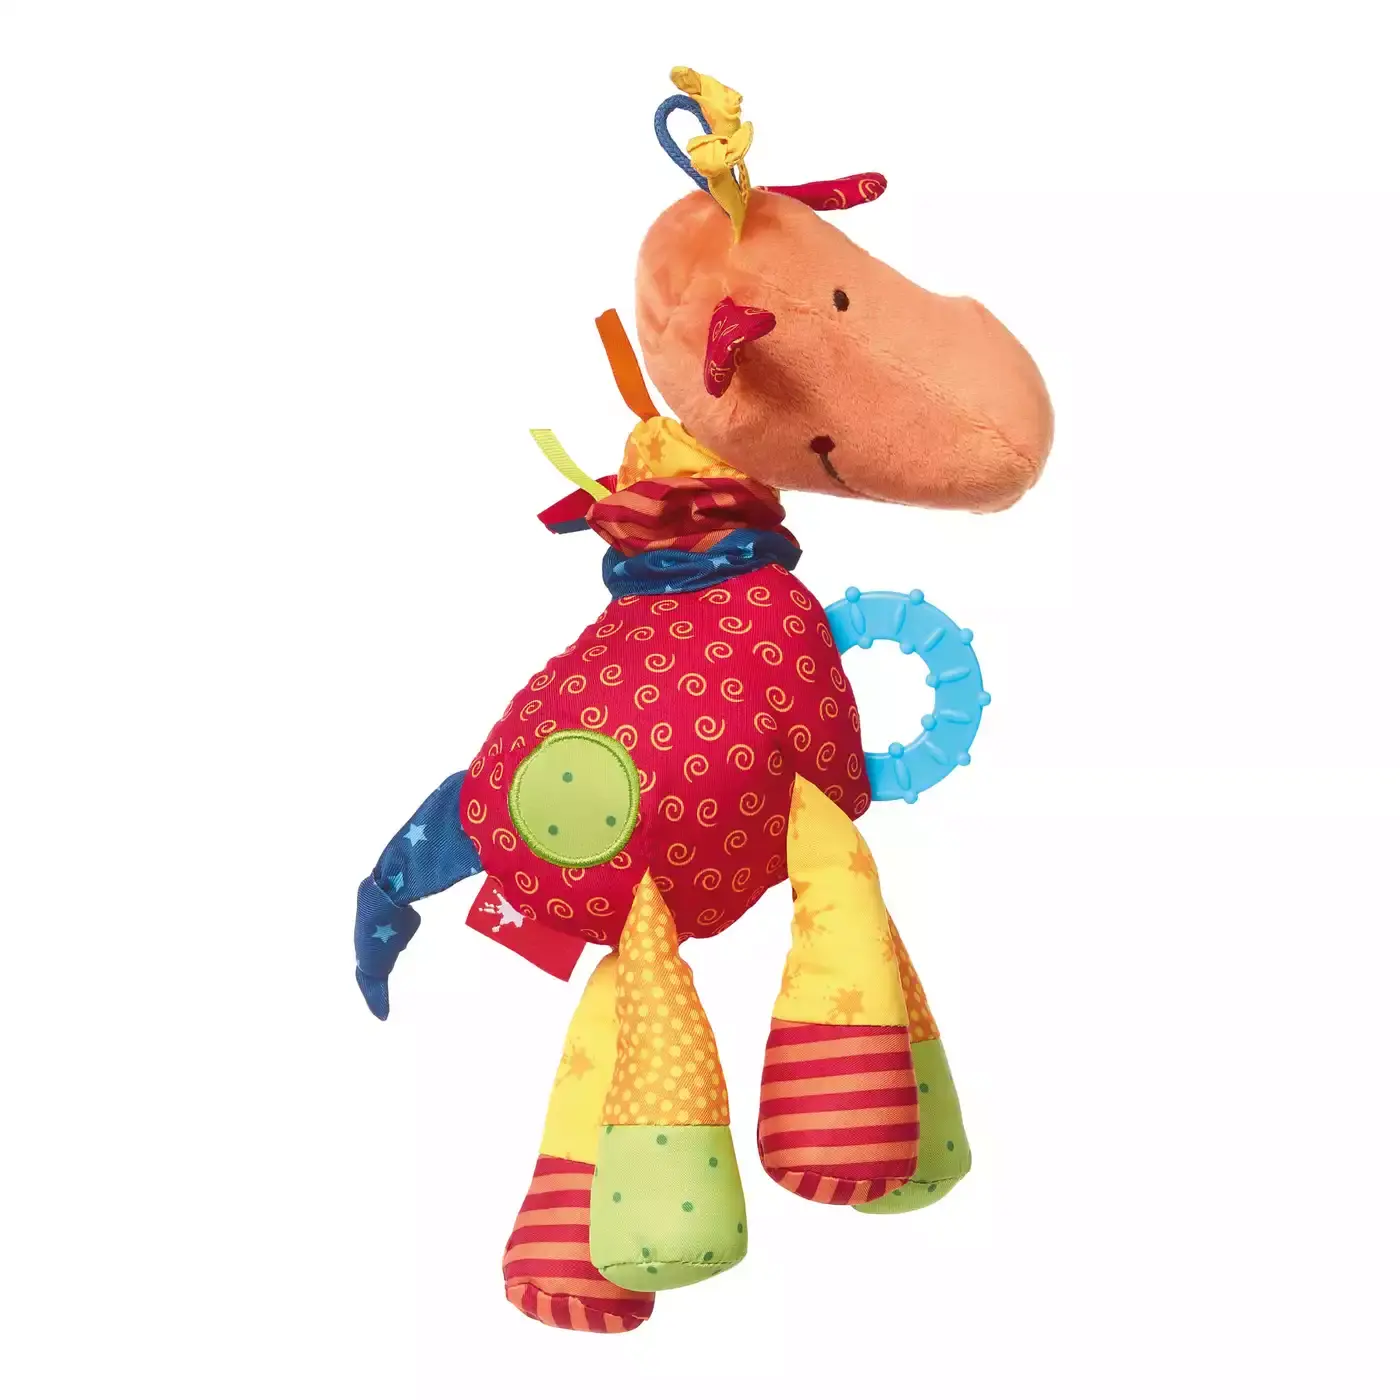 Babyspielzeug Entdecker-Giraffe sigikid 2000557654501 1